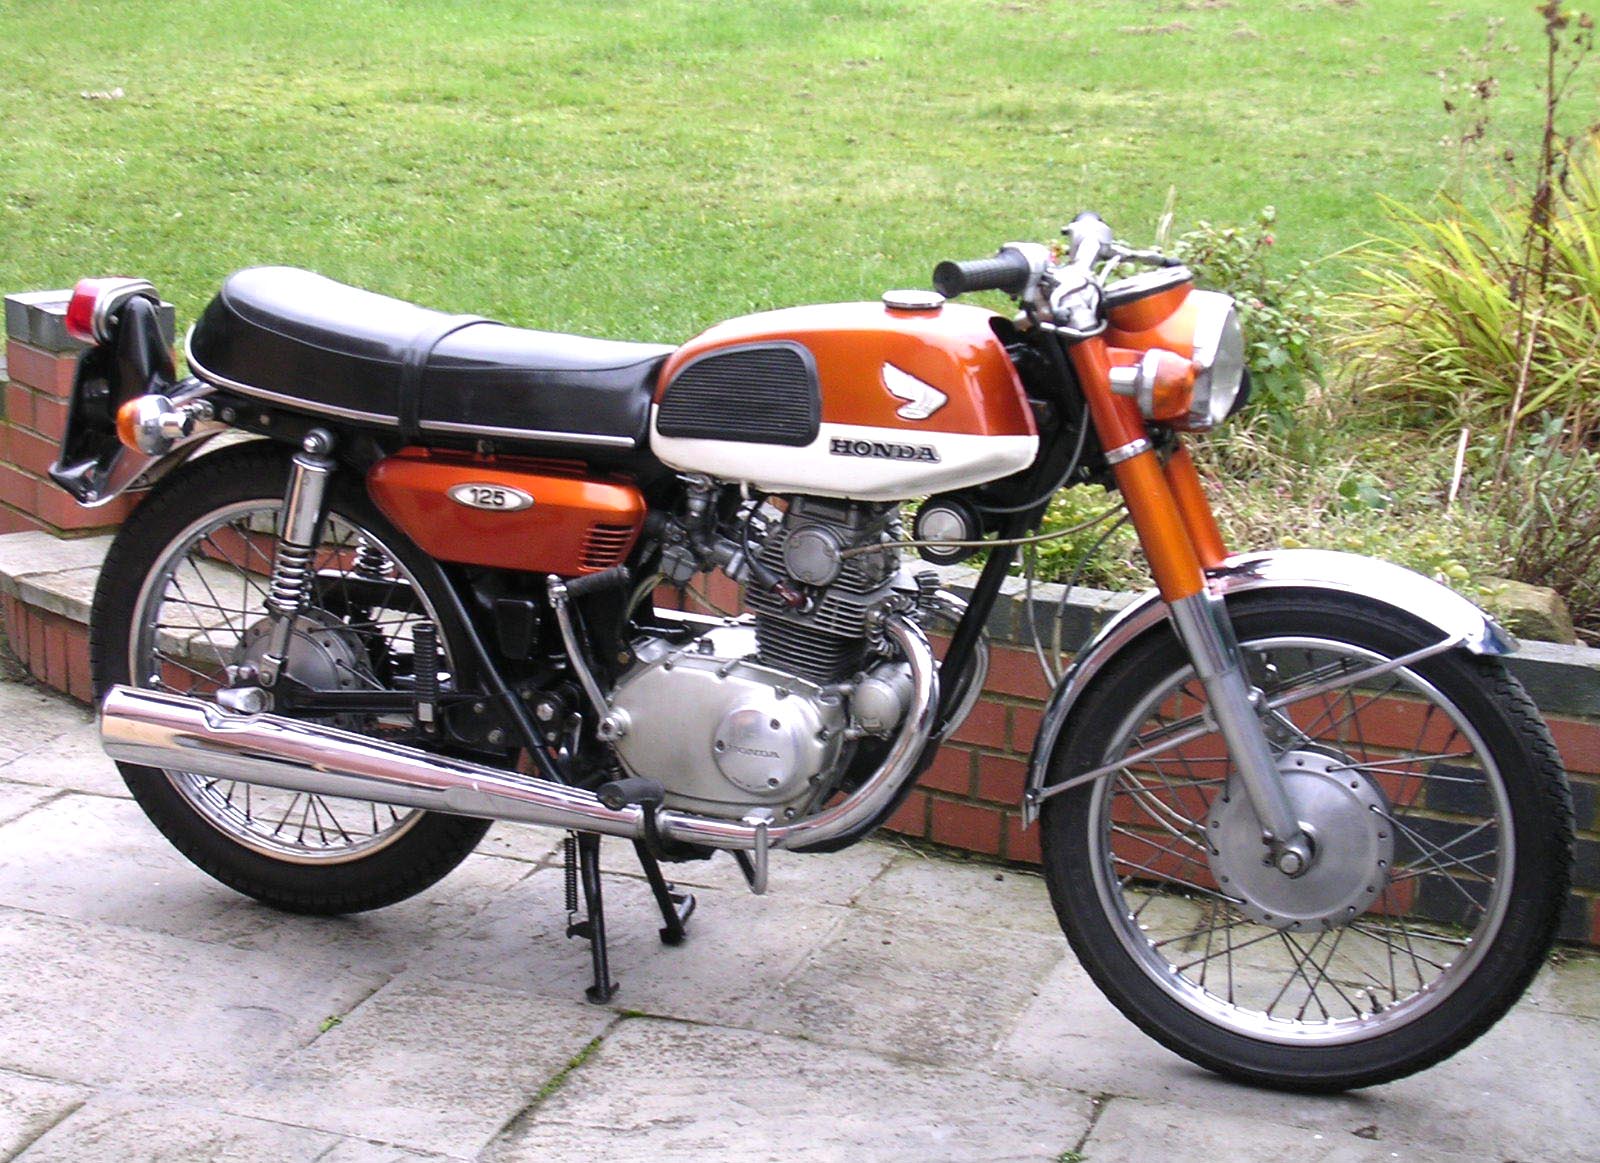 Honda+CB125+Twin+1970.JPG